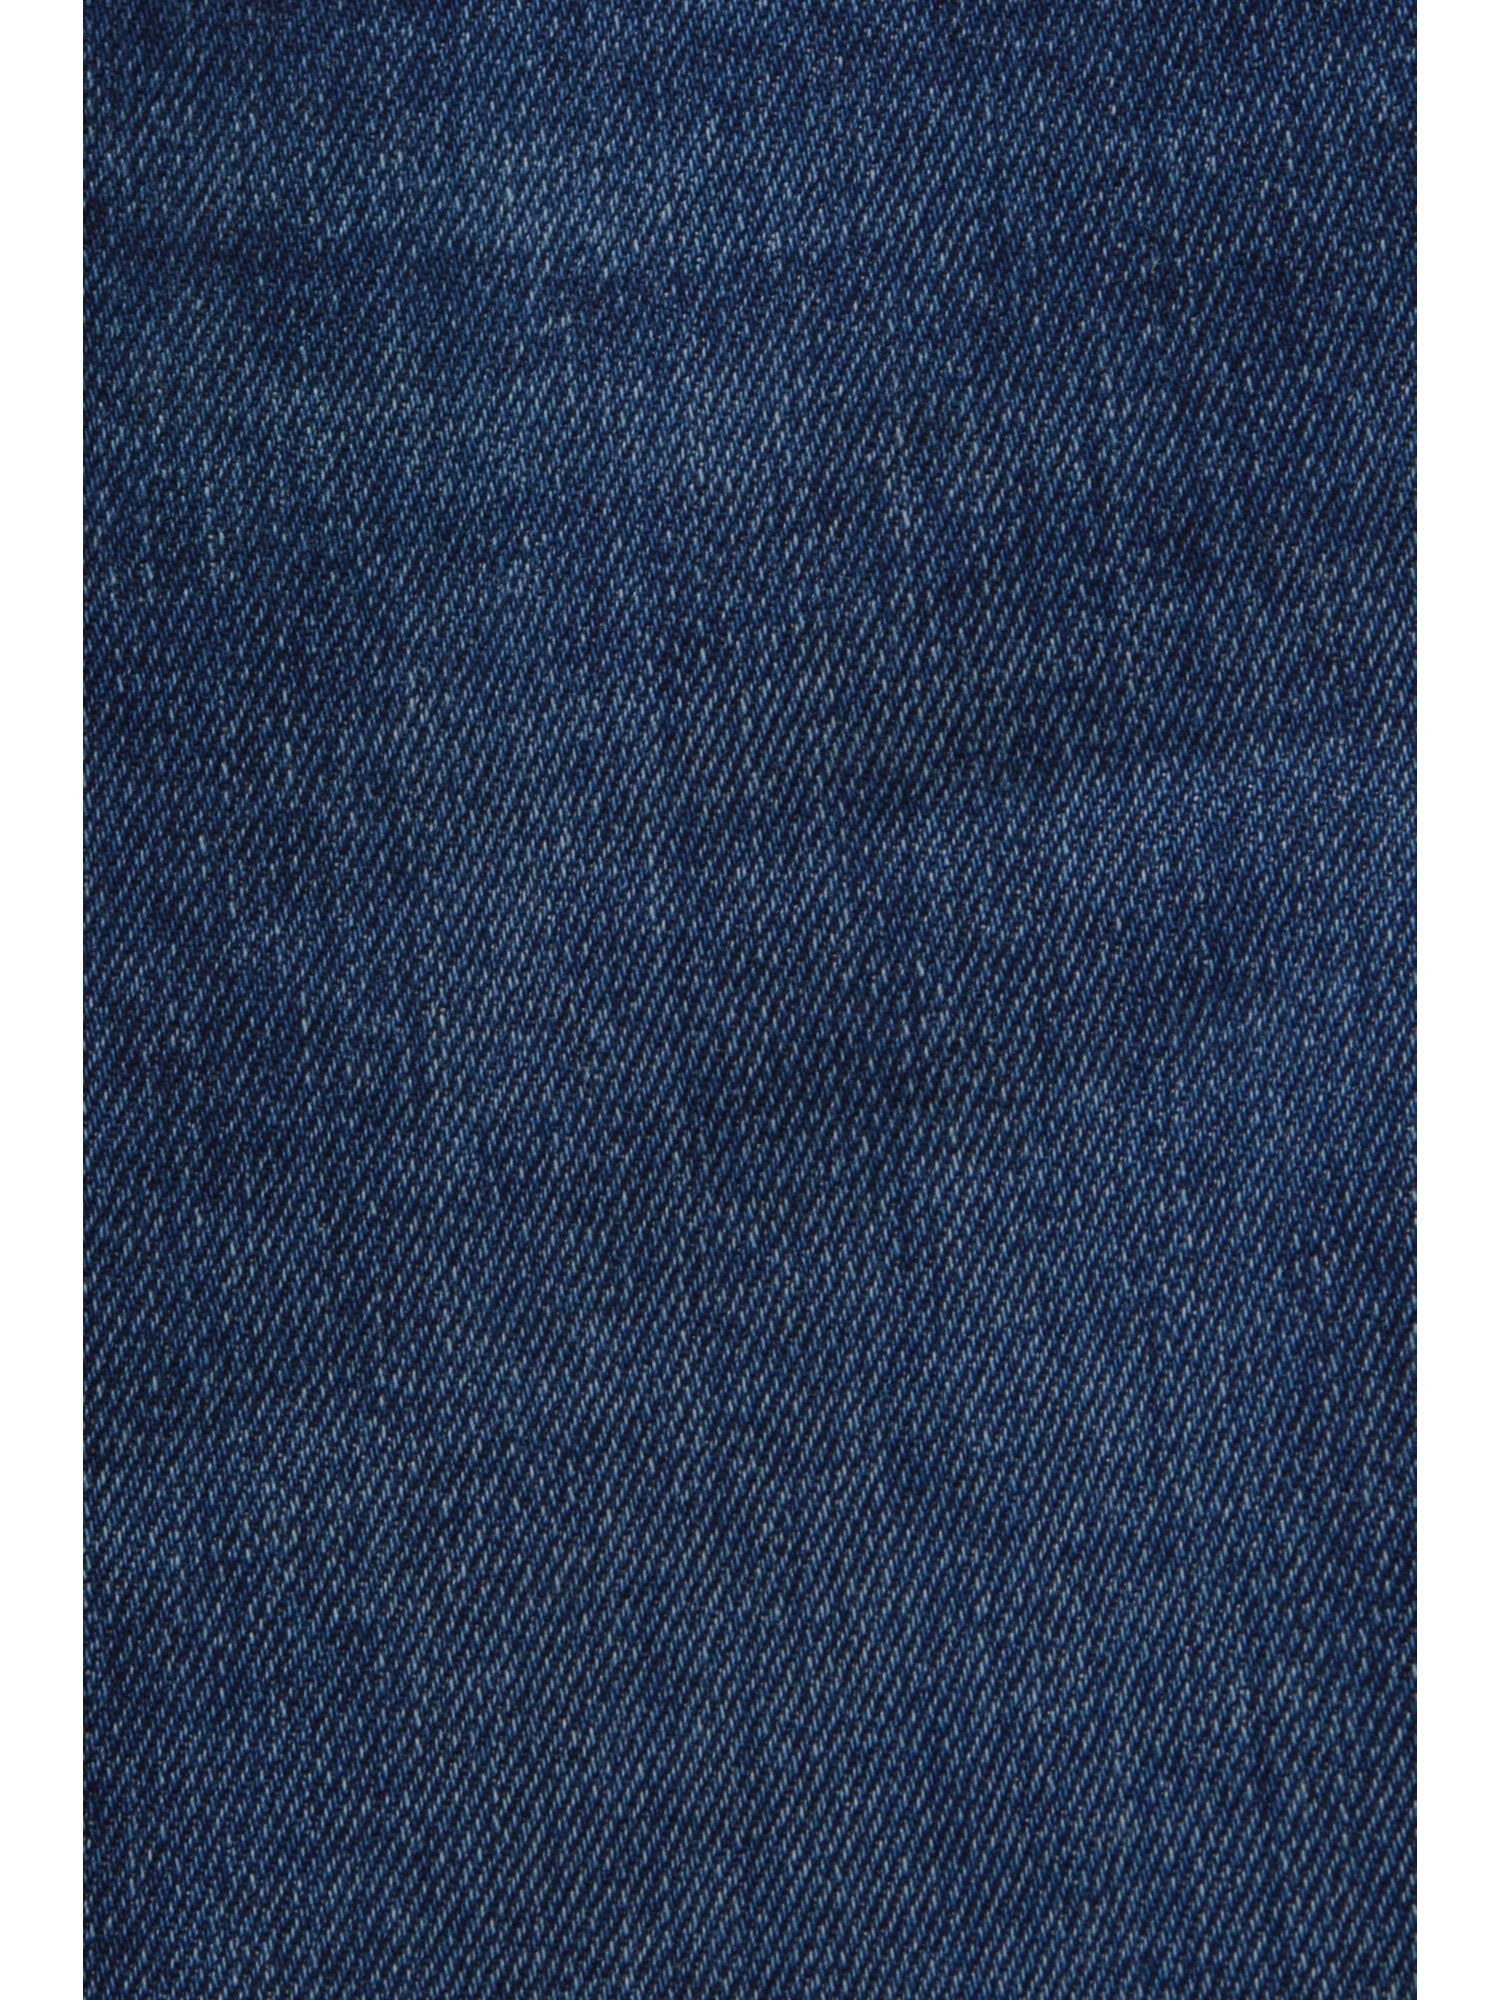 Esprit Bund Bequeme Retro-Classic-Jeans mit Jeans hohem